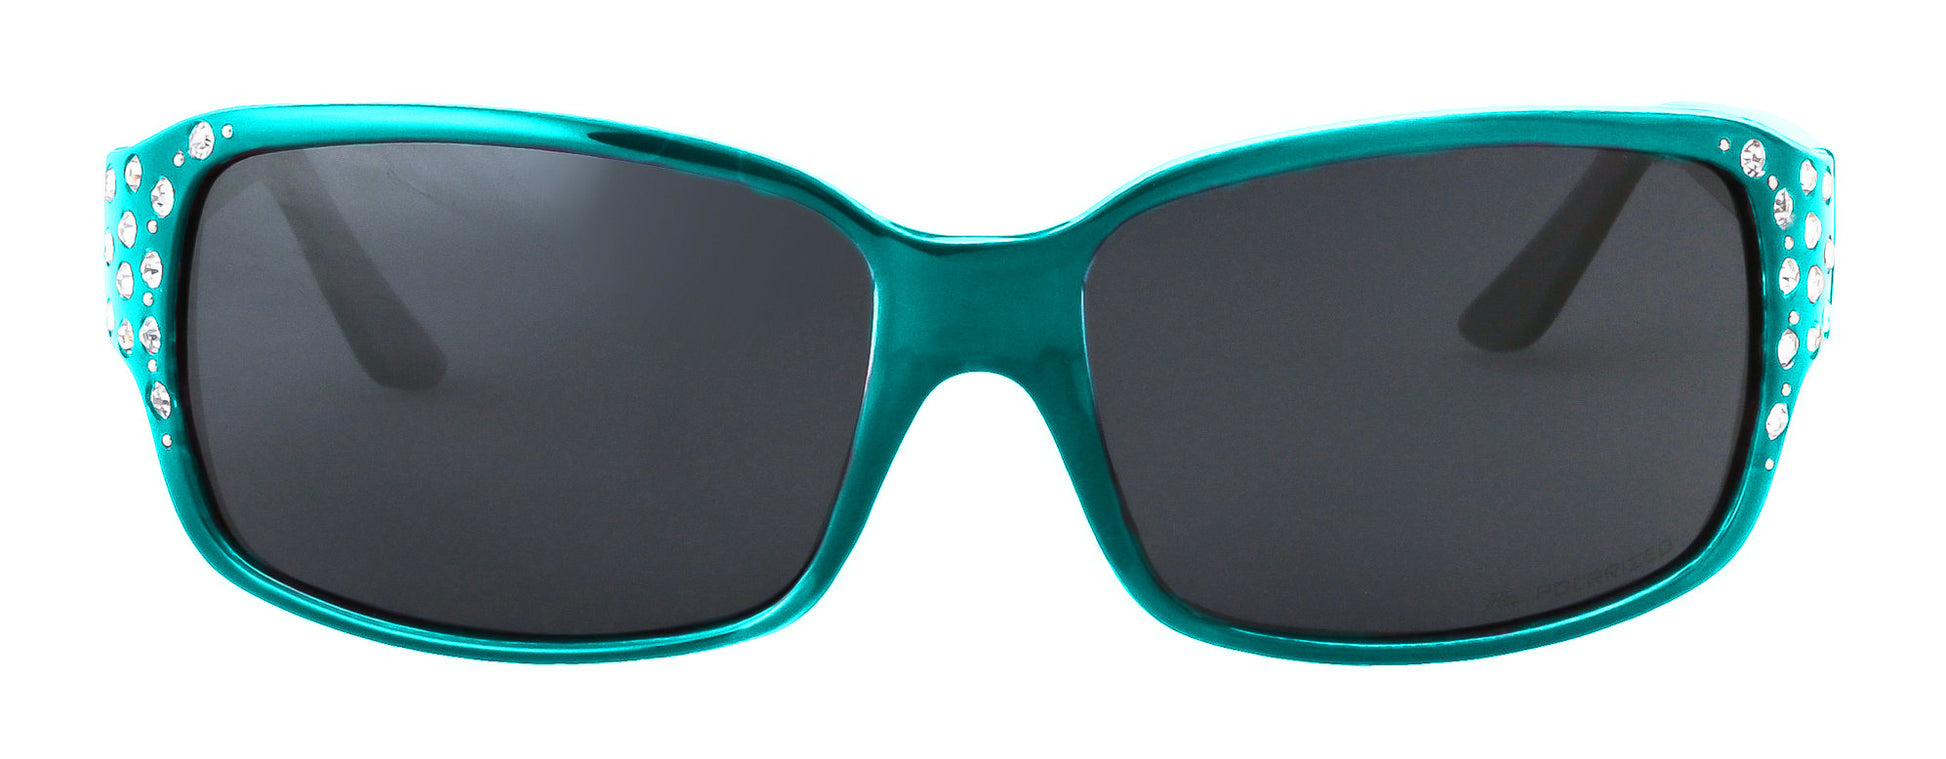 Second image: Polarized Sunglasses for Women - Premium Teal Fashion Sunglasses - HZ Series Diamante Womens Designer Sunglasses